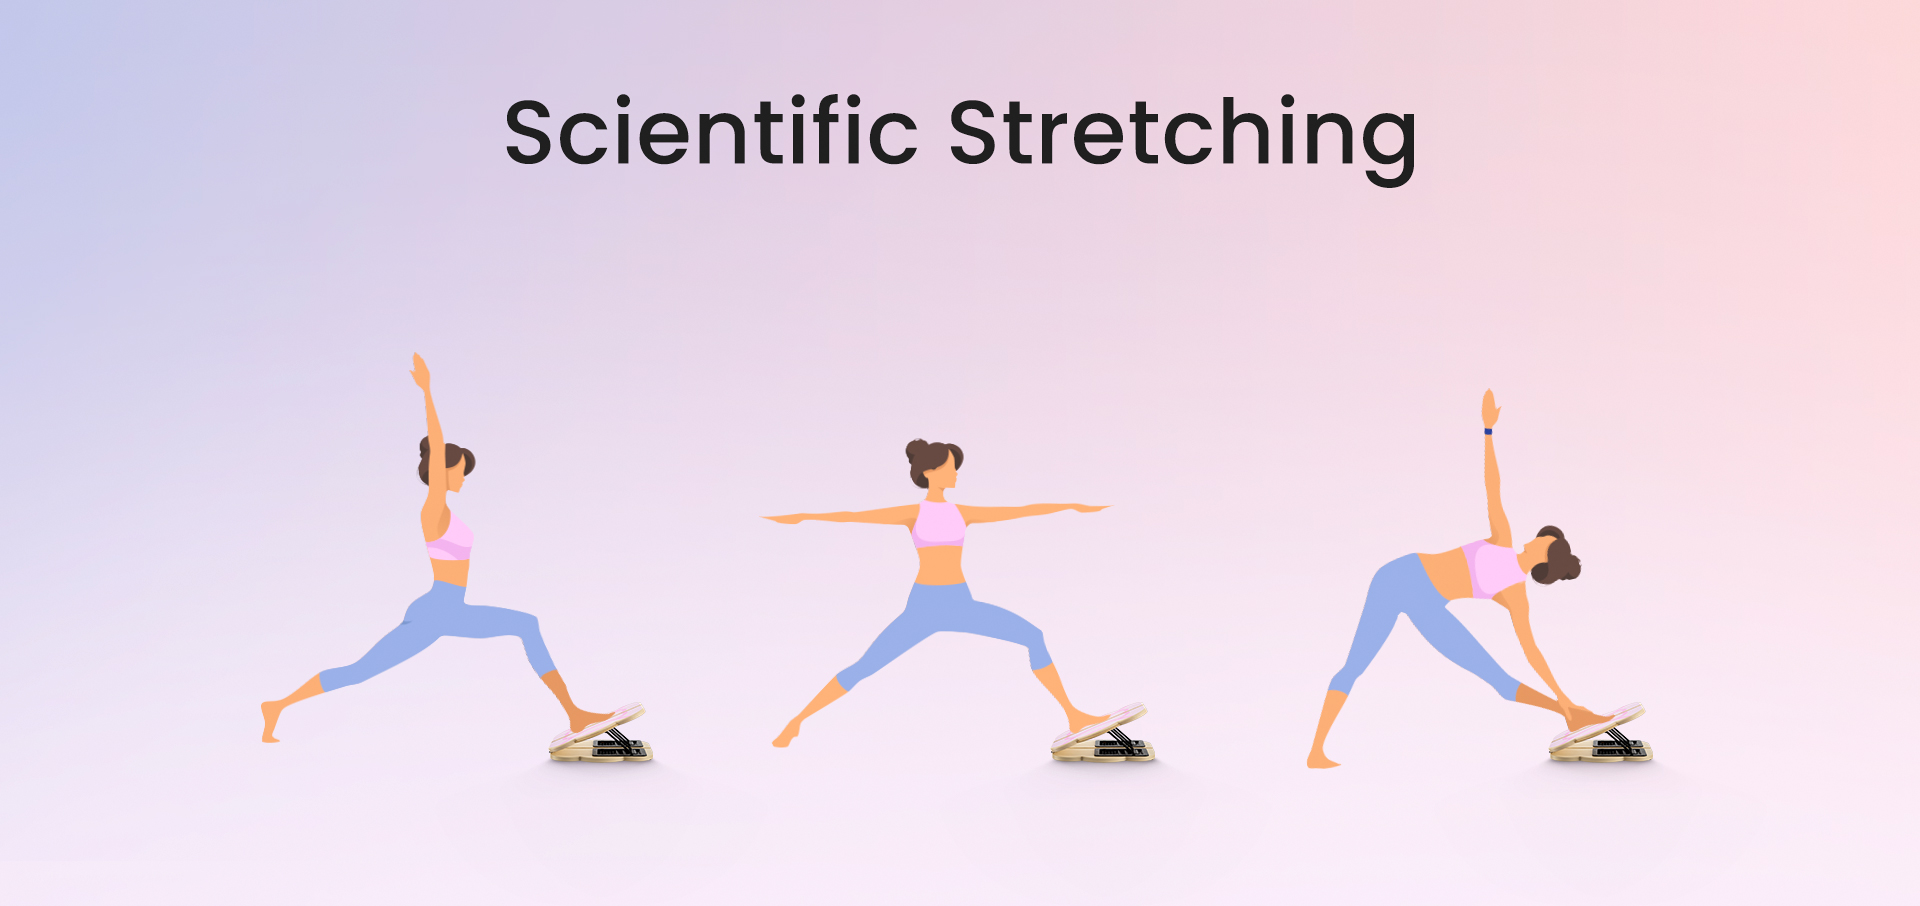 Scientific stretching